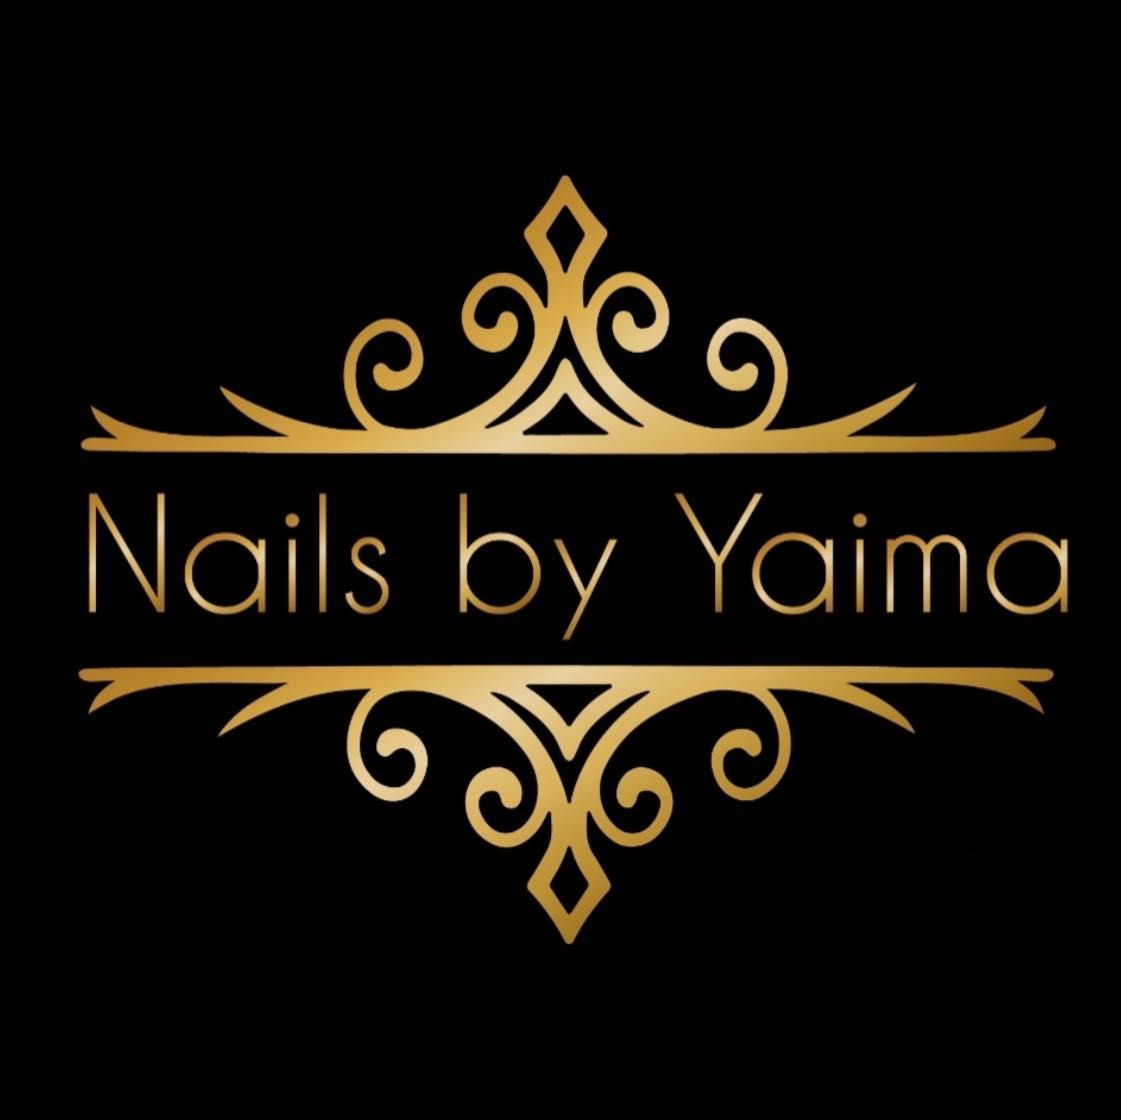 Nails by Yaima, 7340 Ponderosa Dr, Tampa, 33637